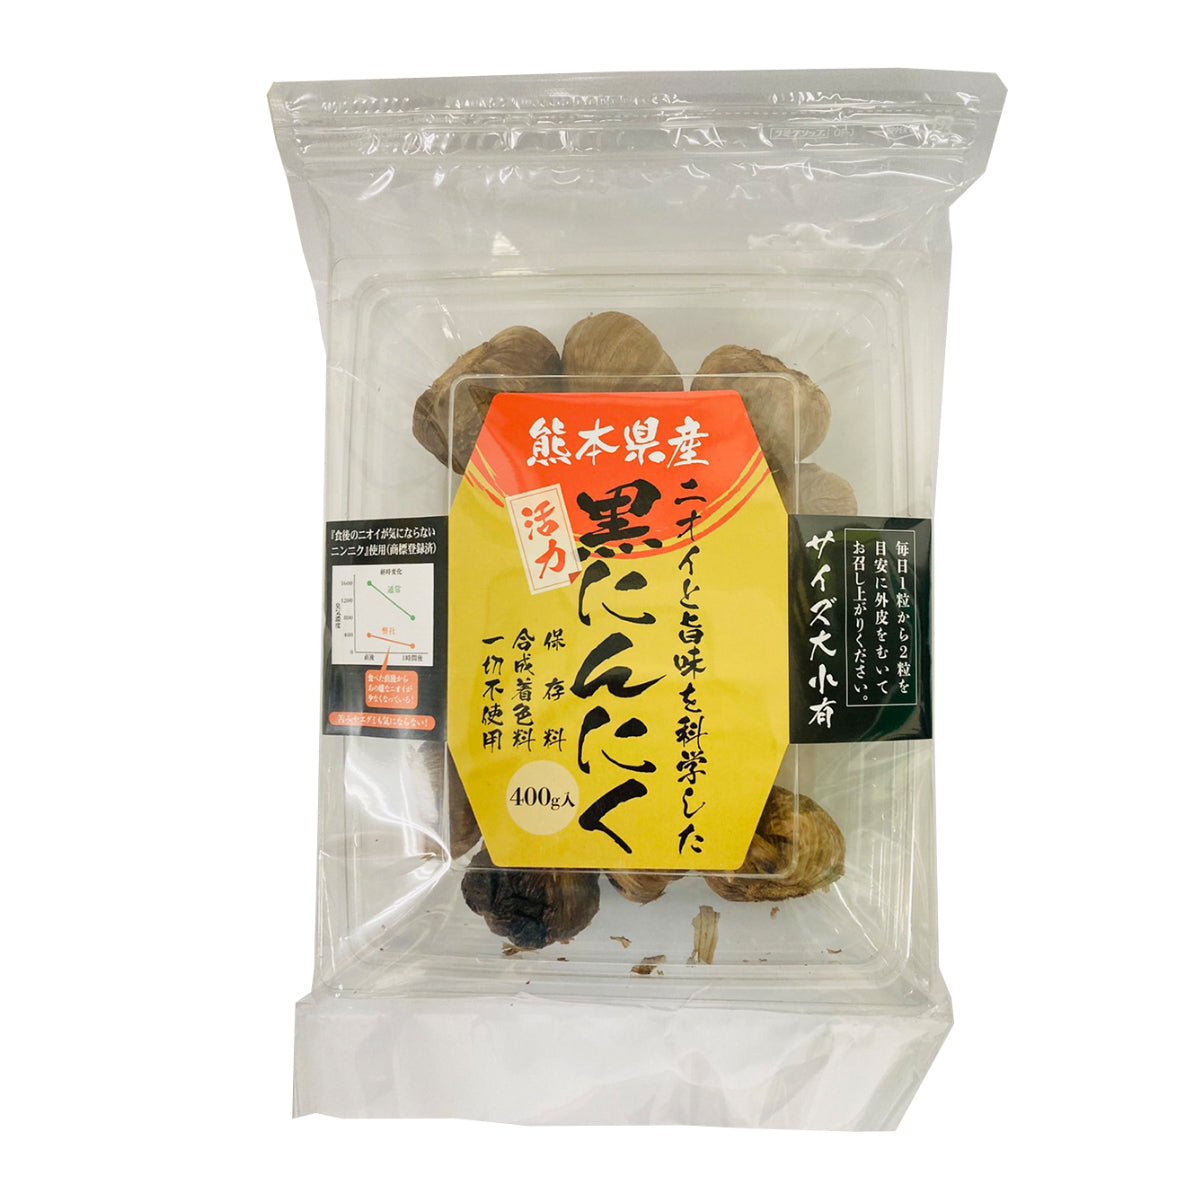 Kumamoto Fermented Black Garlic - Additive Free 400g - Tokyo Fresh Direct